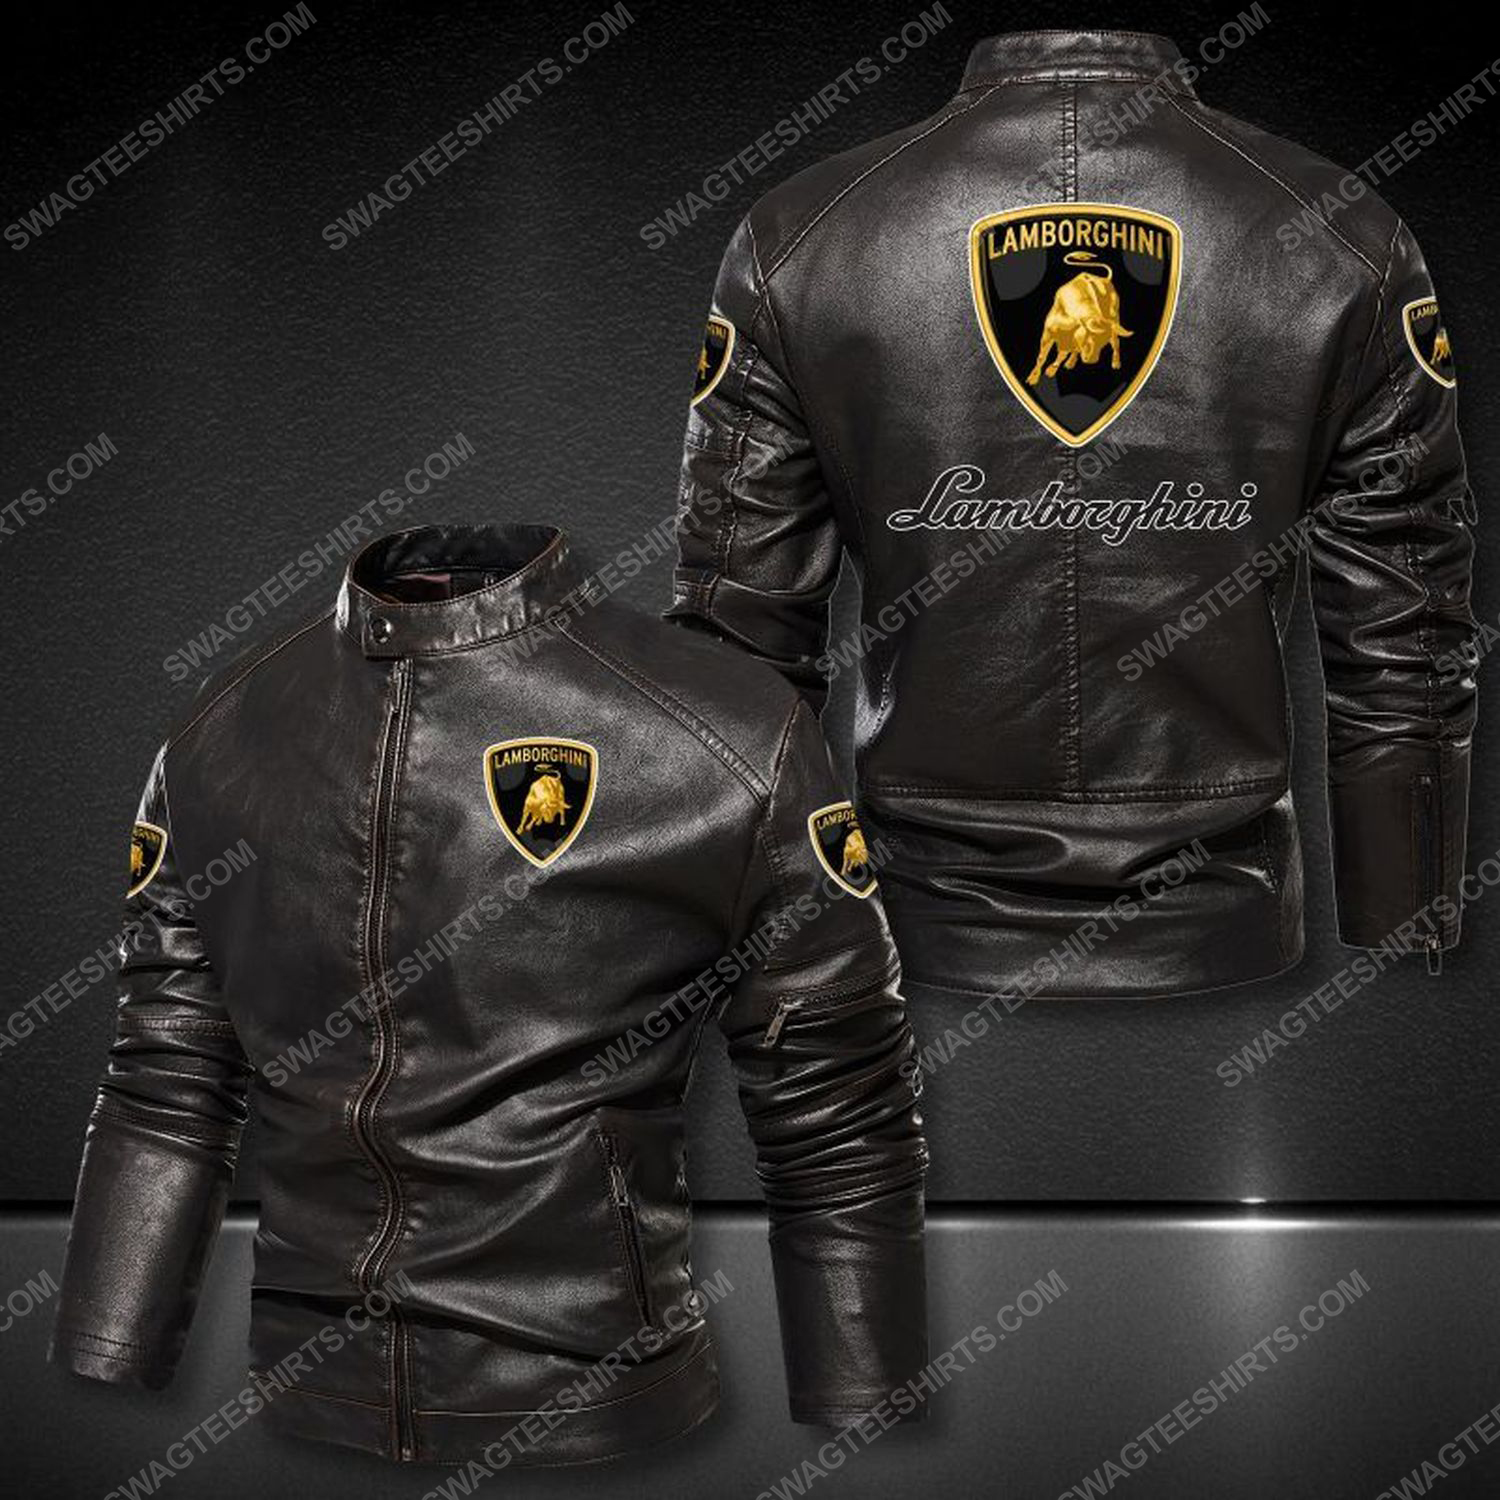 Automobili lamborghini sports car leather jacket 1 - Copy